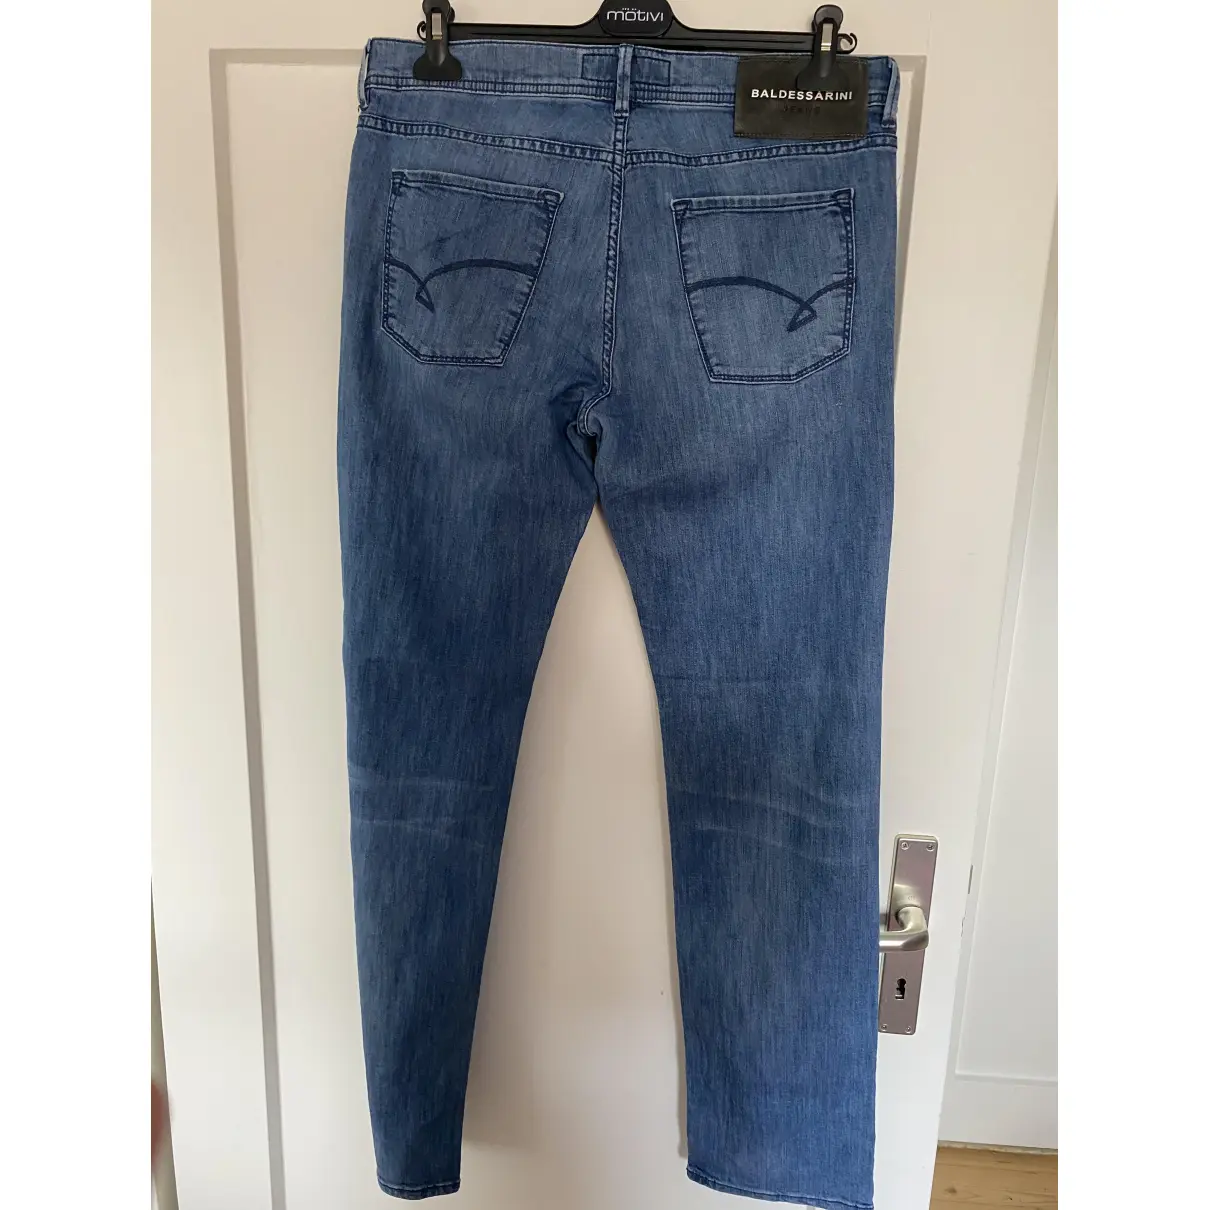 Buy Baldessarini Straight jeans online